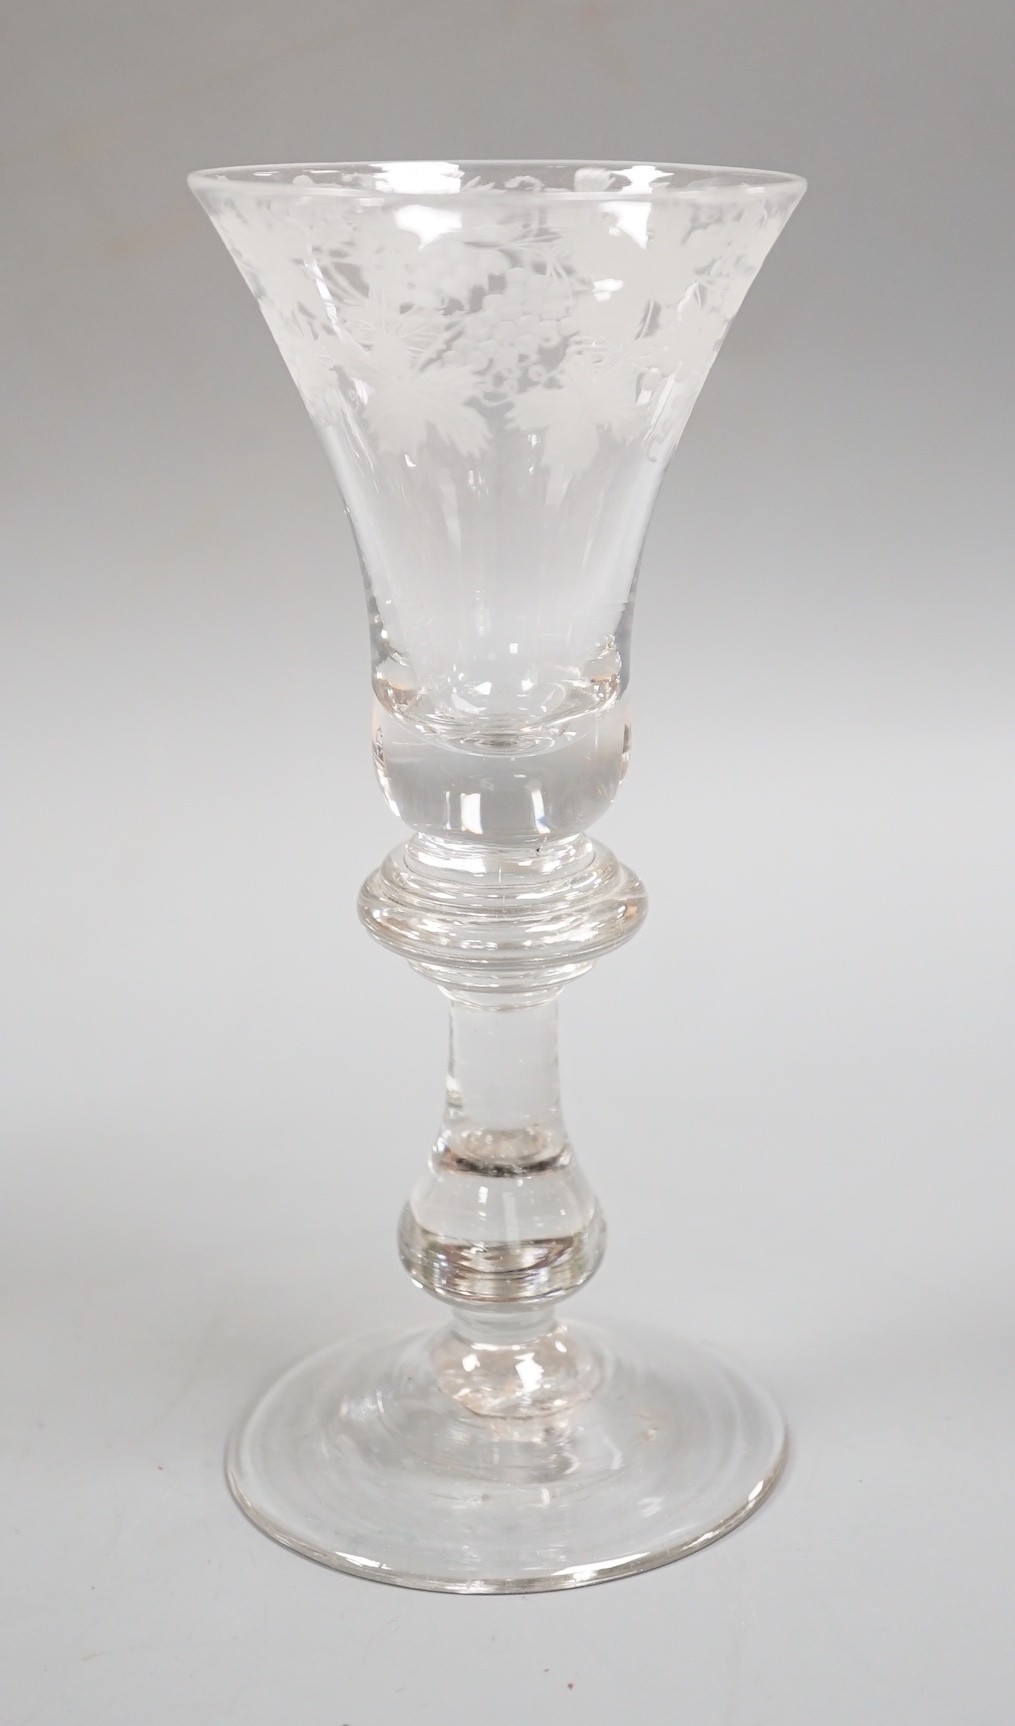 An engraved baluster stem wine glass, 17cm